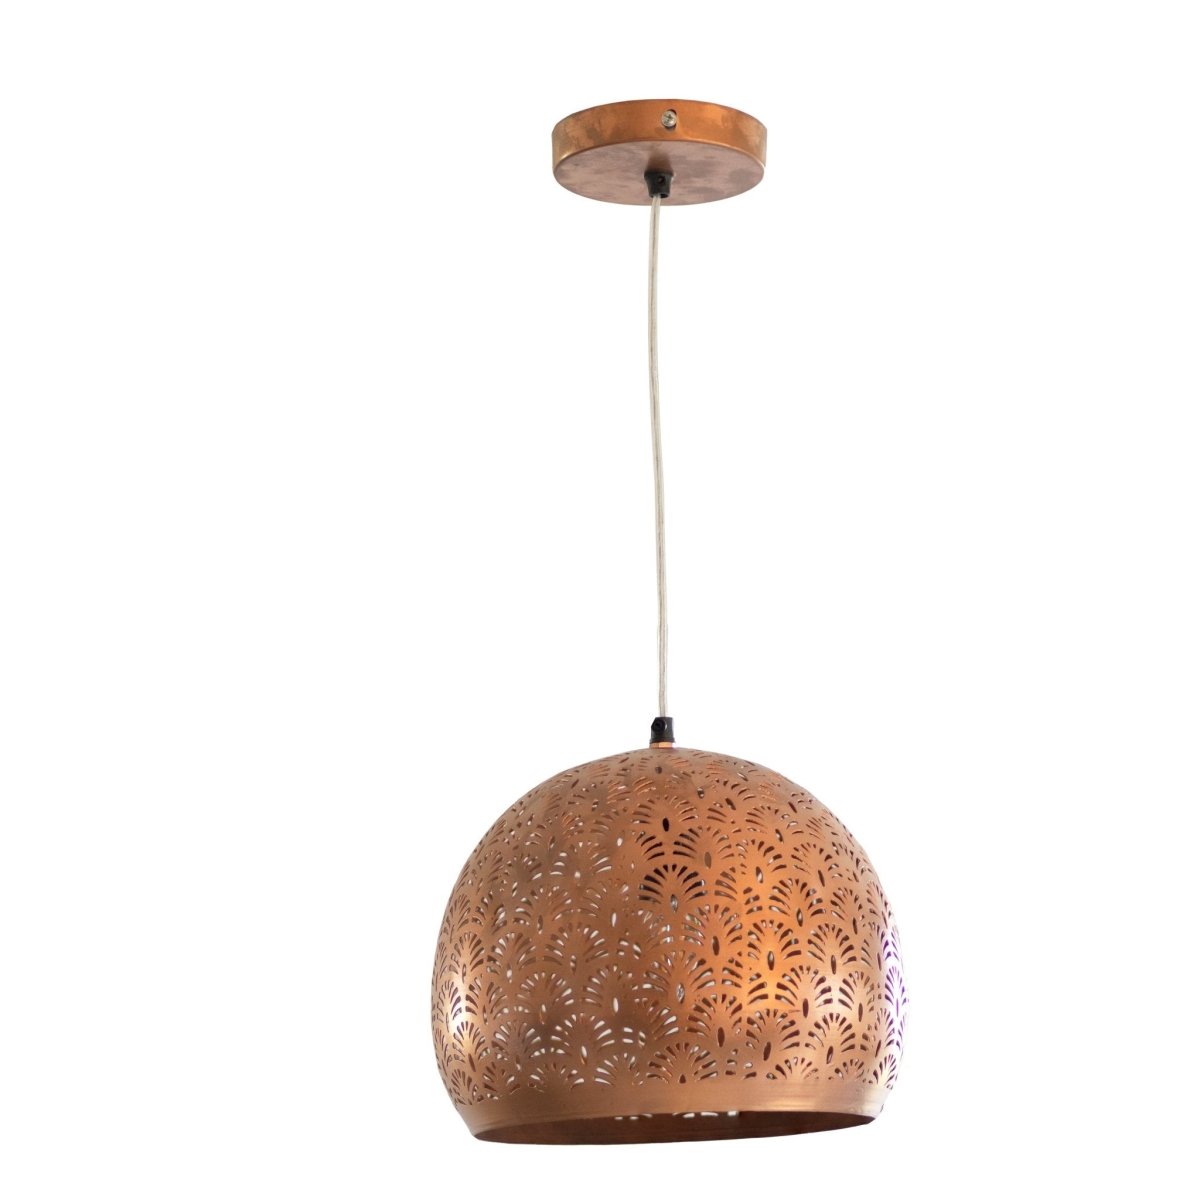 Kezevel Metal Decor Hanging Light - Handcrafted Copper Finish Patterned Round Hanging Light for Living Room, Decorative Pendant Light, Size 27X27X24CM - Kezevel